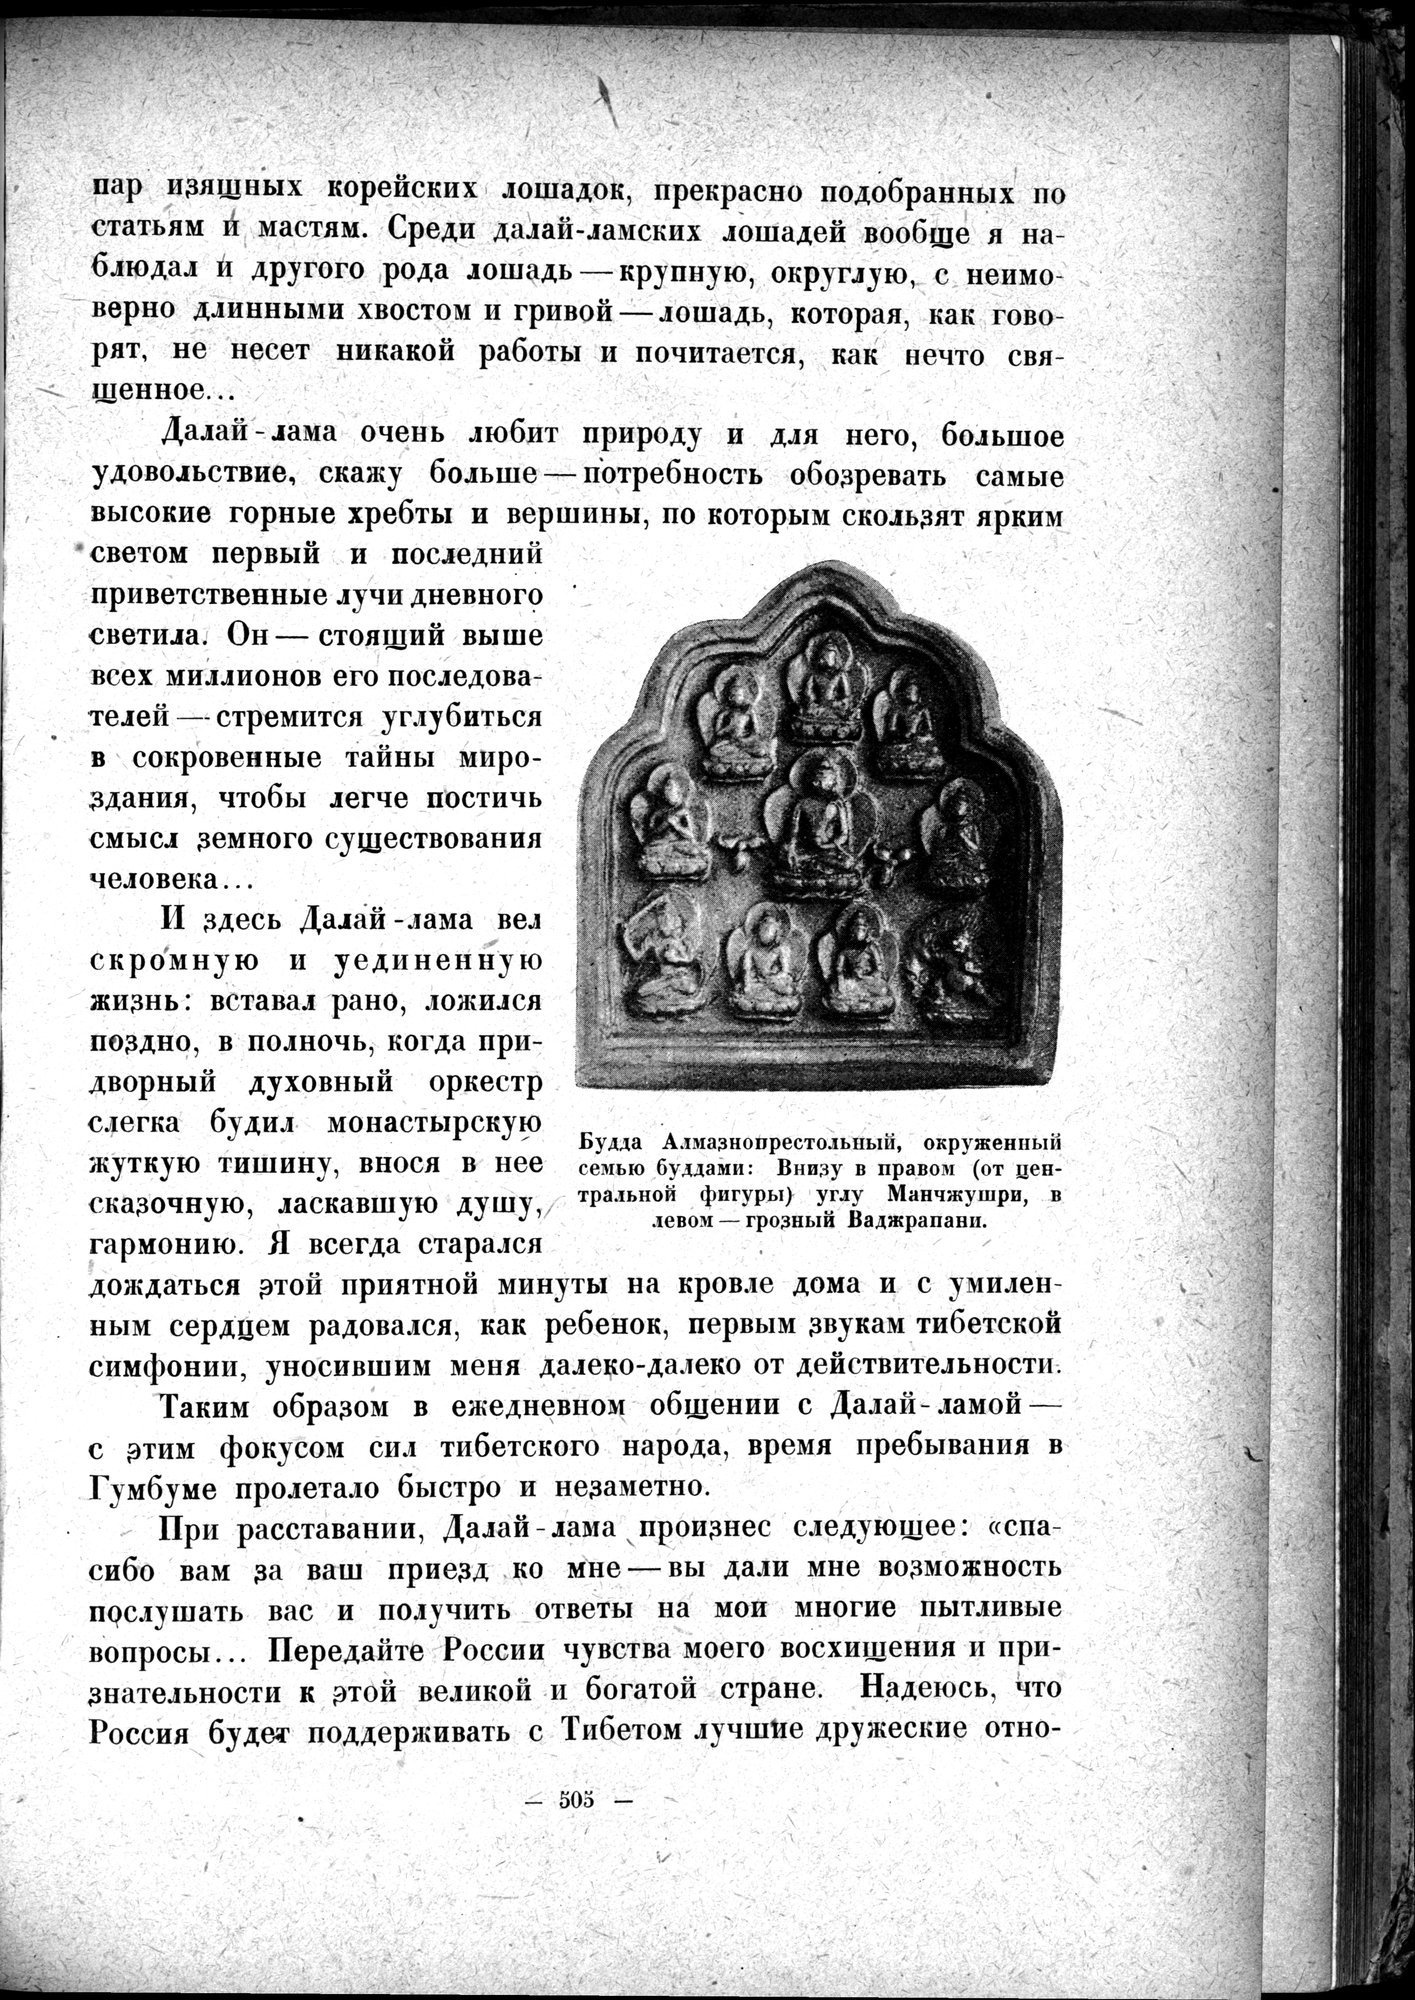 Mongoliya i Amdo i mertby gorod Khara-Khoto : vol.1 / Page 581 (Grayscale High Resolution Image)